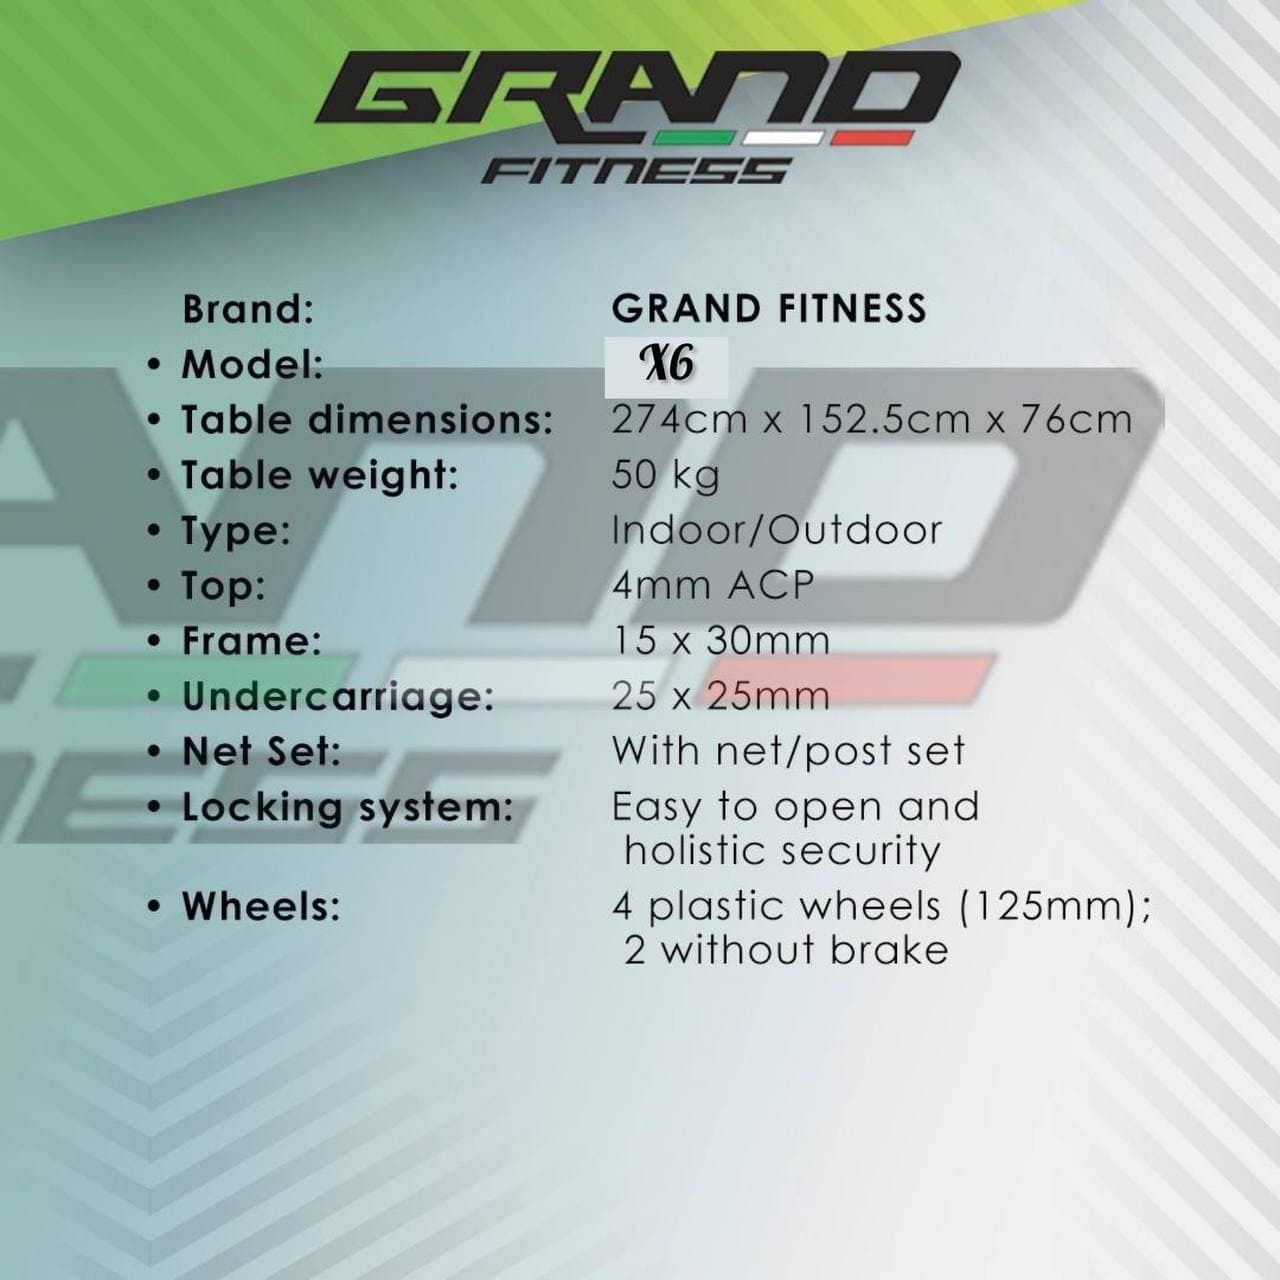 Stol tennis Italia technology X6 Grand Fitness